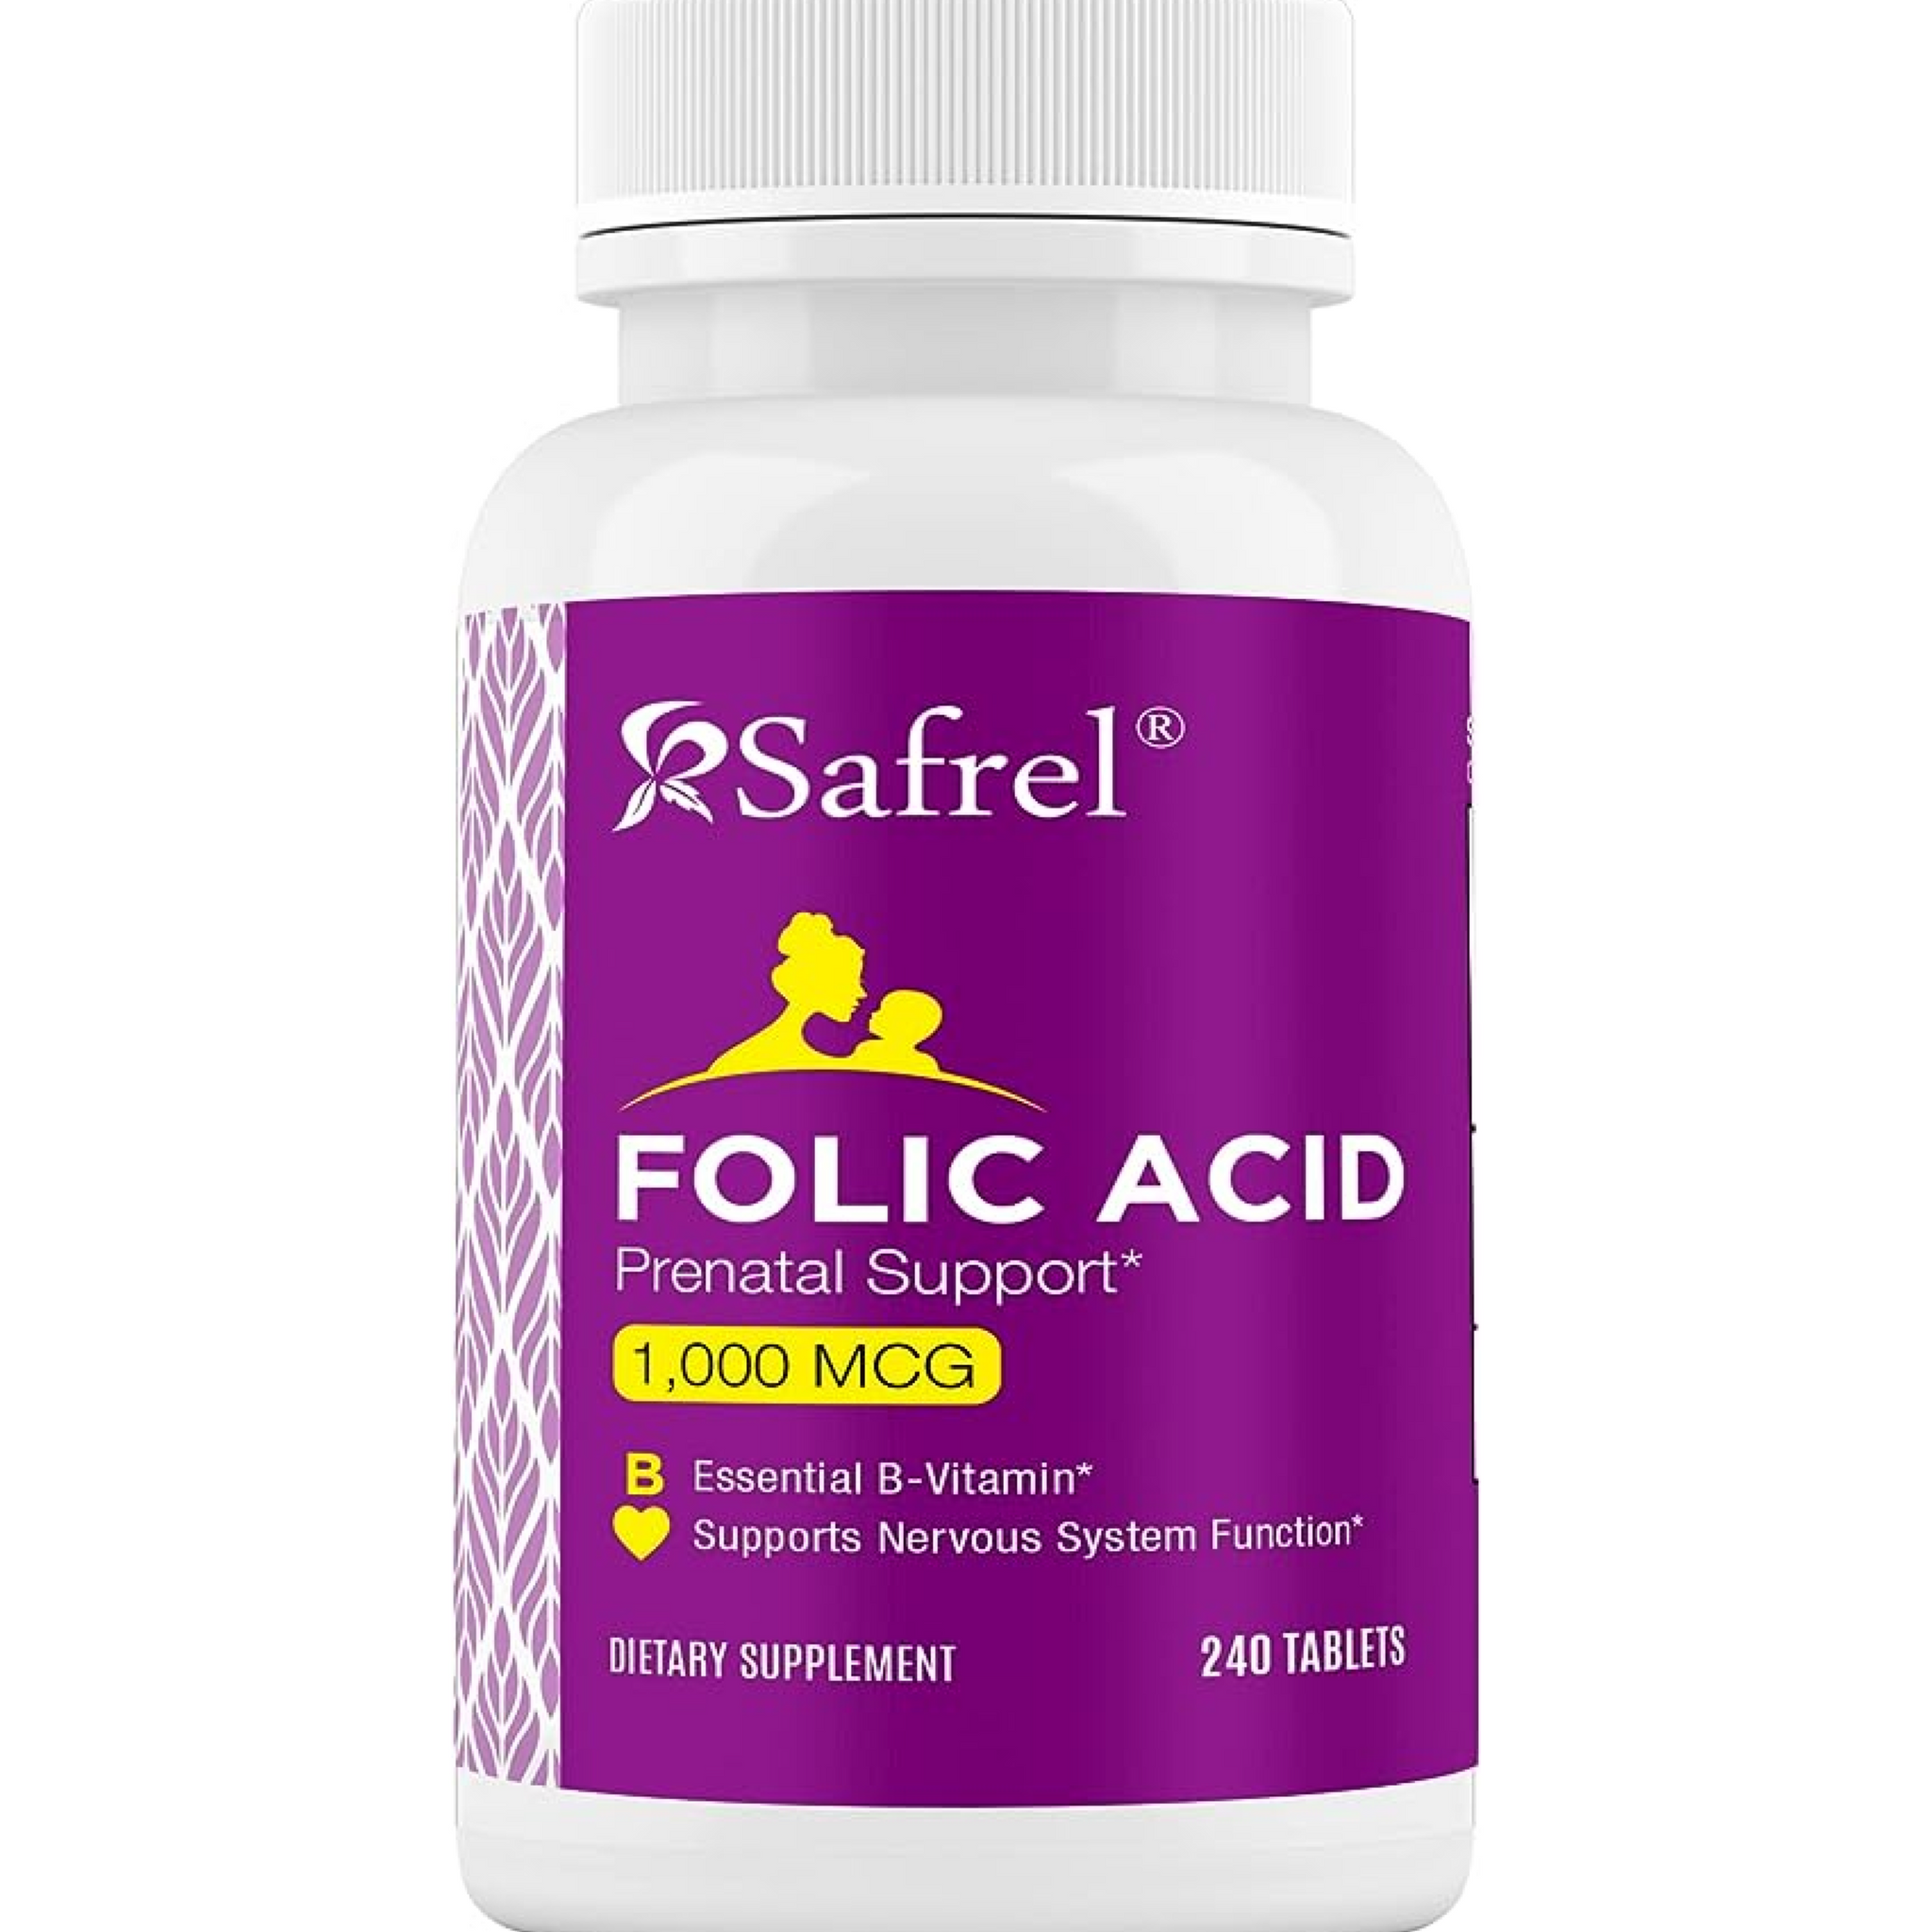 Safrel Folic Acid 1000 mcg (1 mg) - Vitamin B9 - 240 Tablets , Essential Prenatal and Postnatal Vitamin for Fetal Development, Red Blood Cell Production, Cell and Neural Development | Non-GMO, Vegan